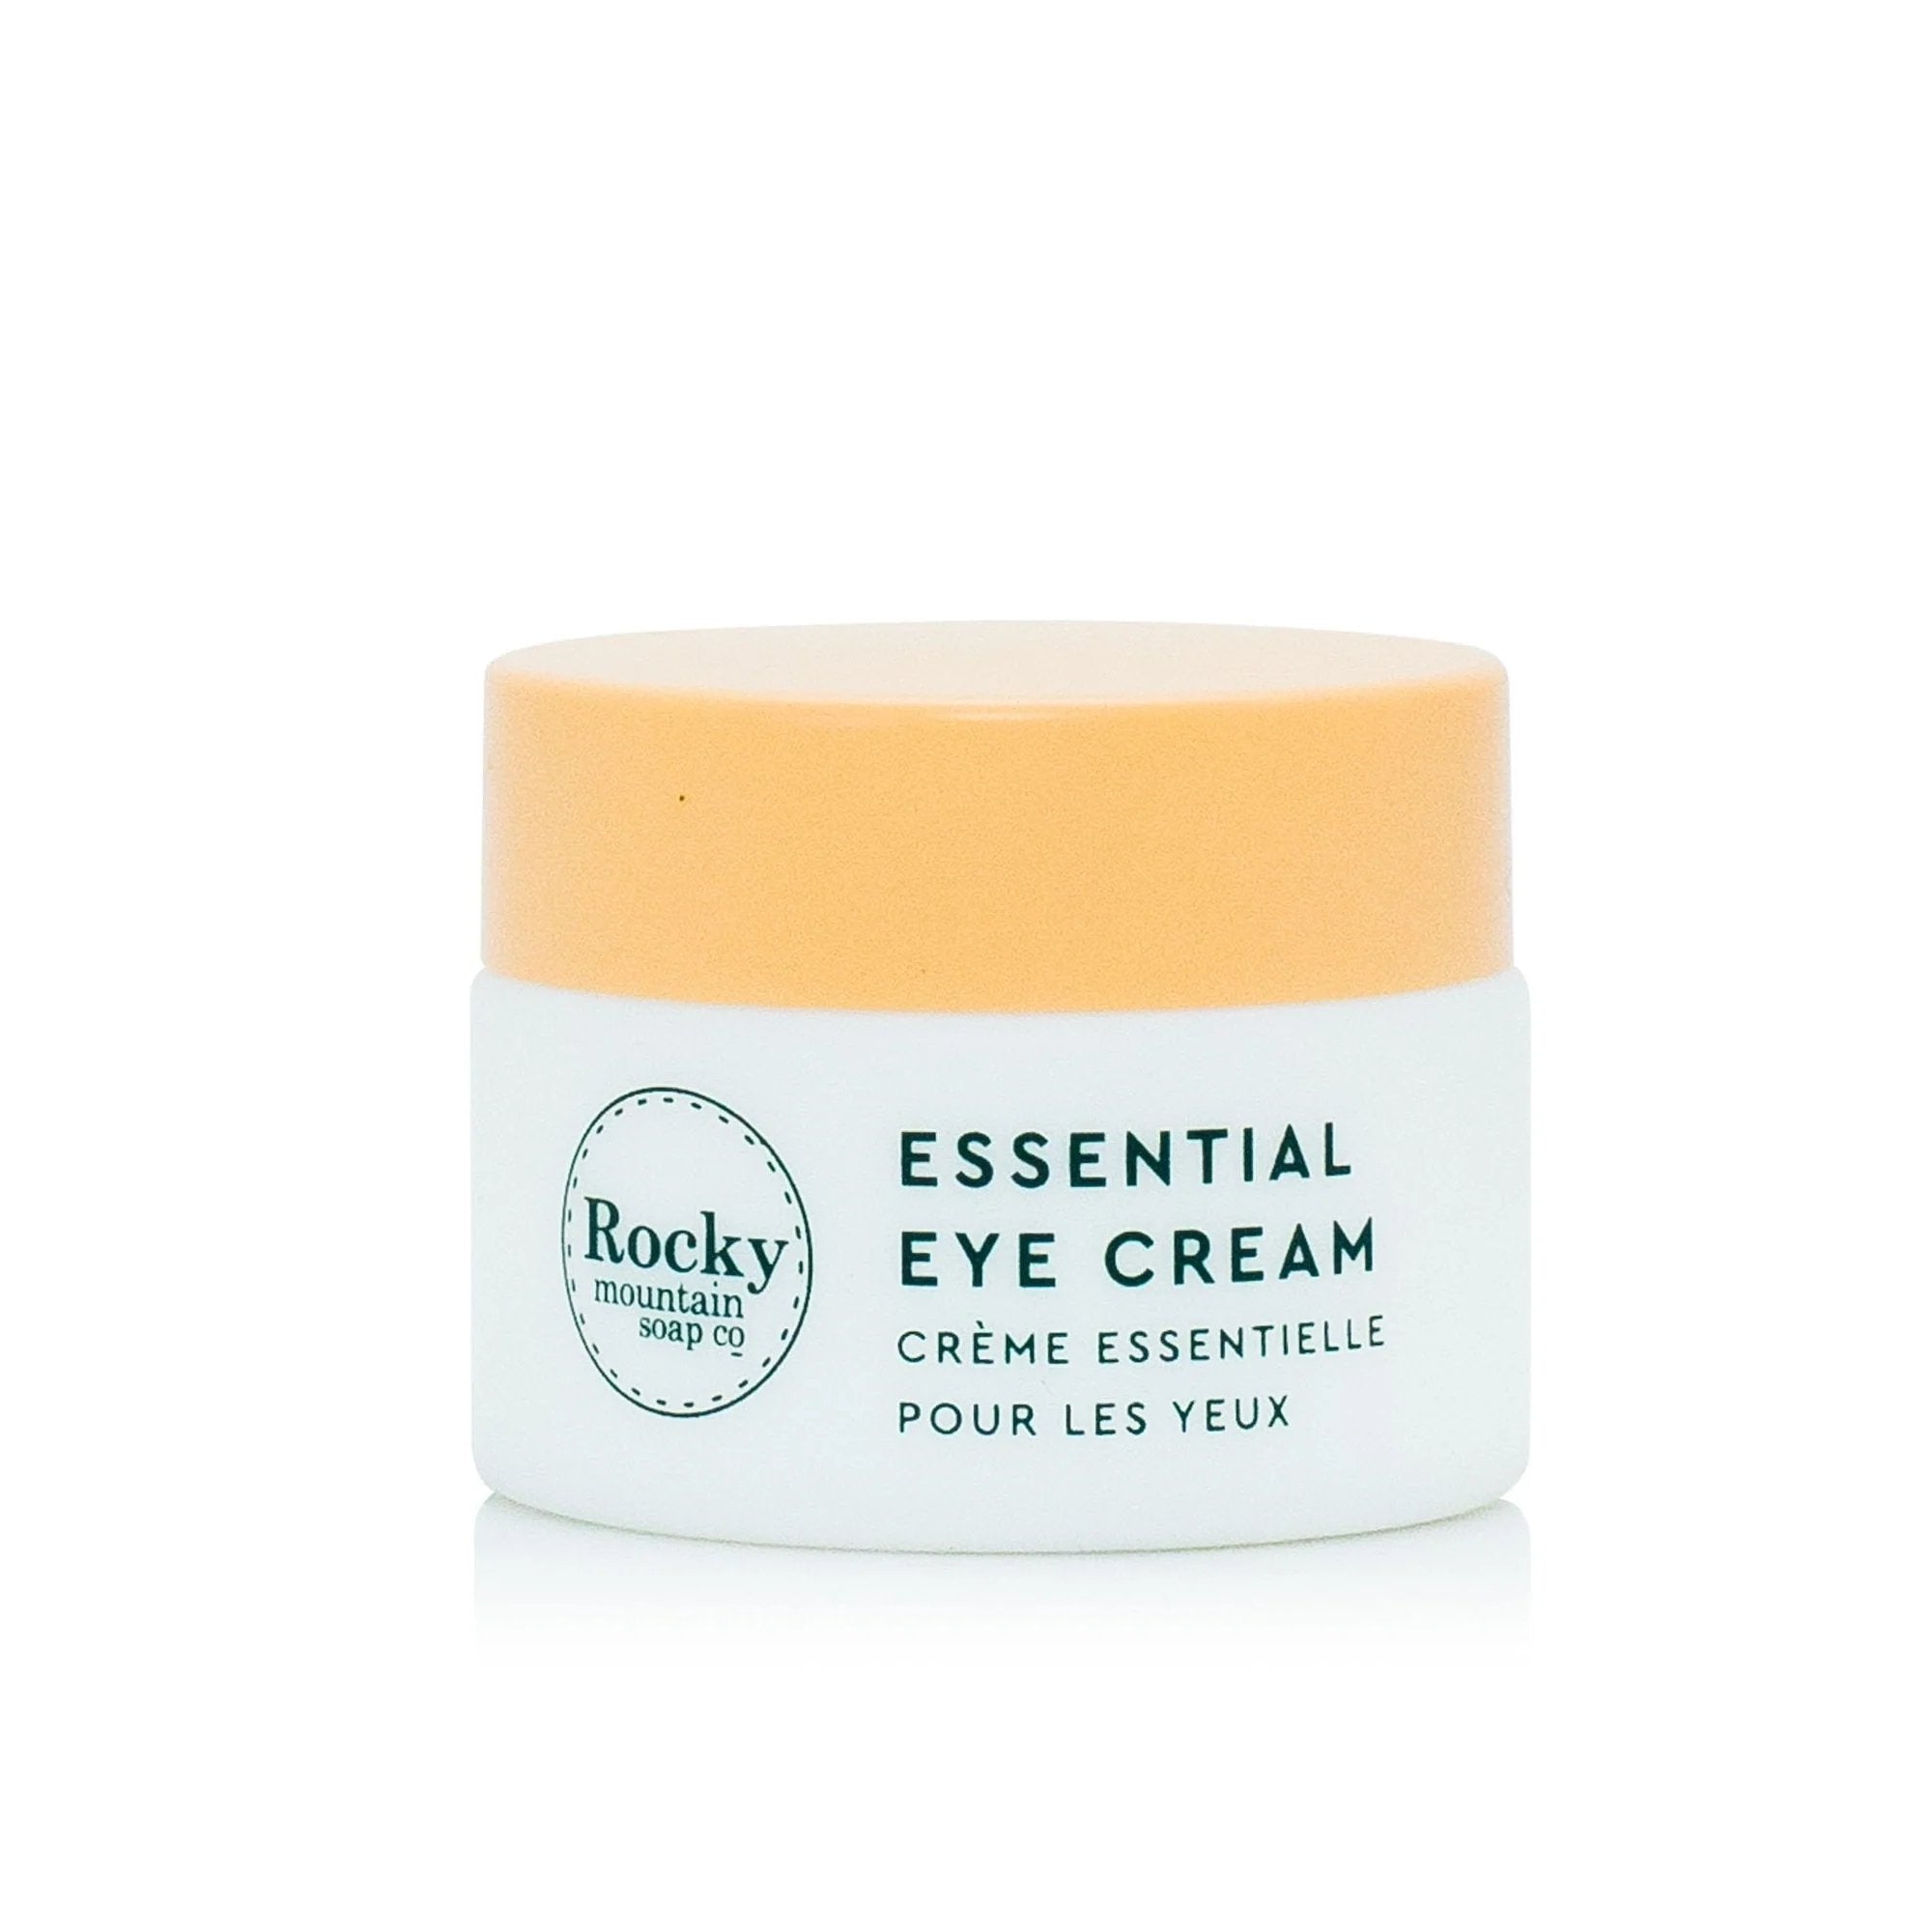 Essential Eye Cream by Rocky Mountain Soap Company